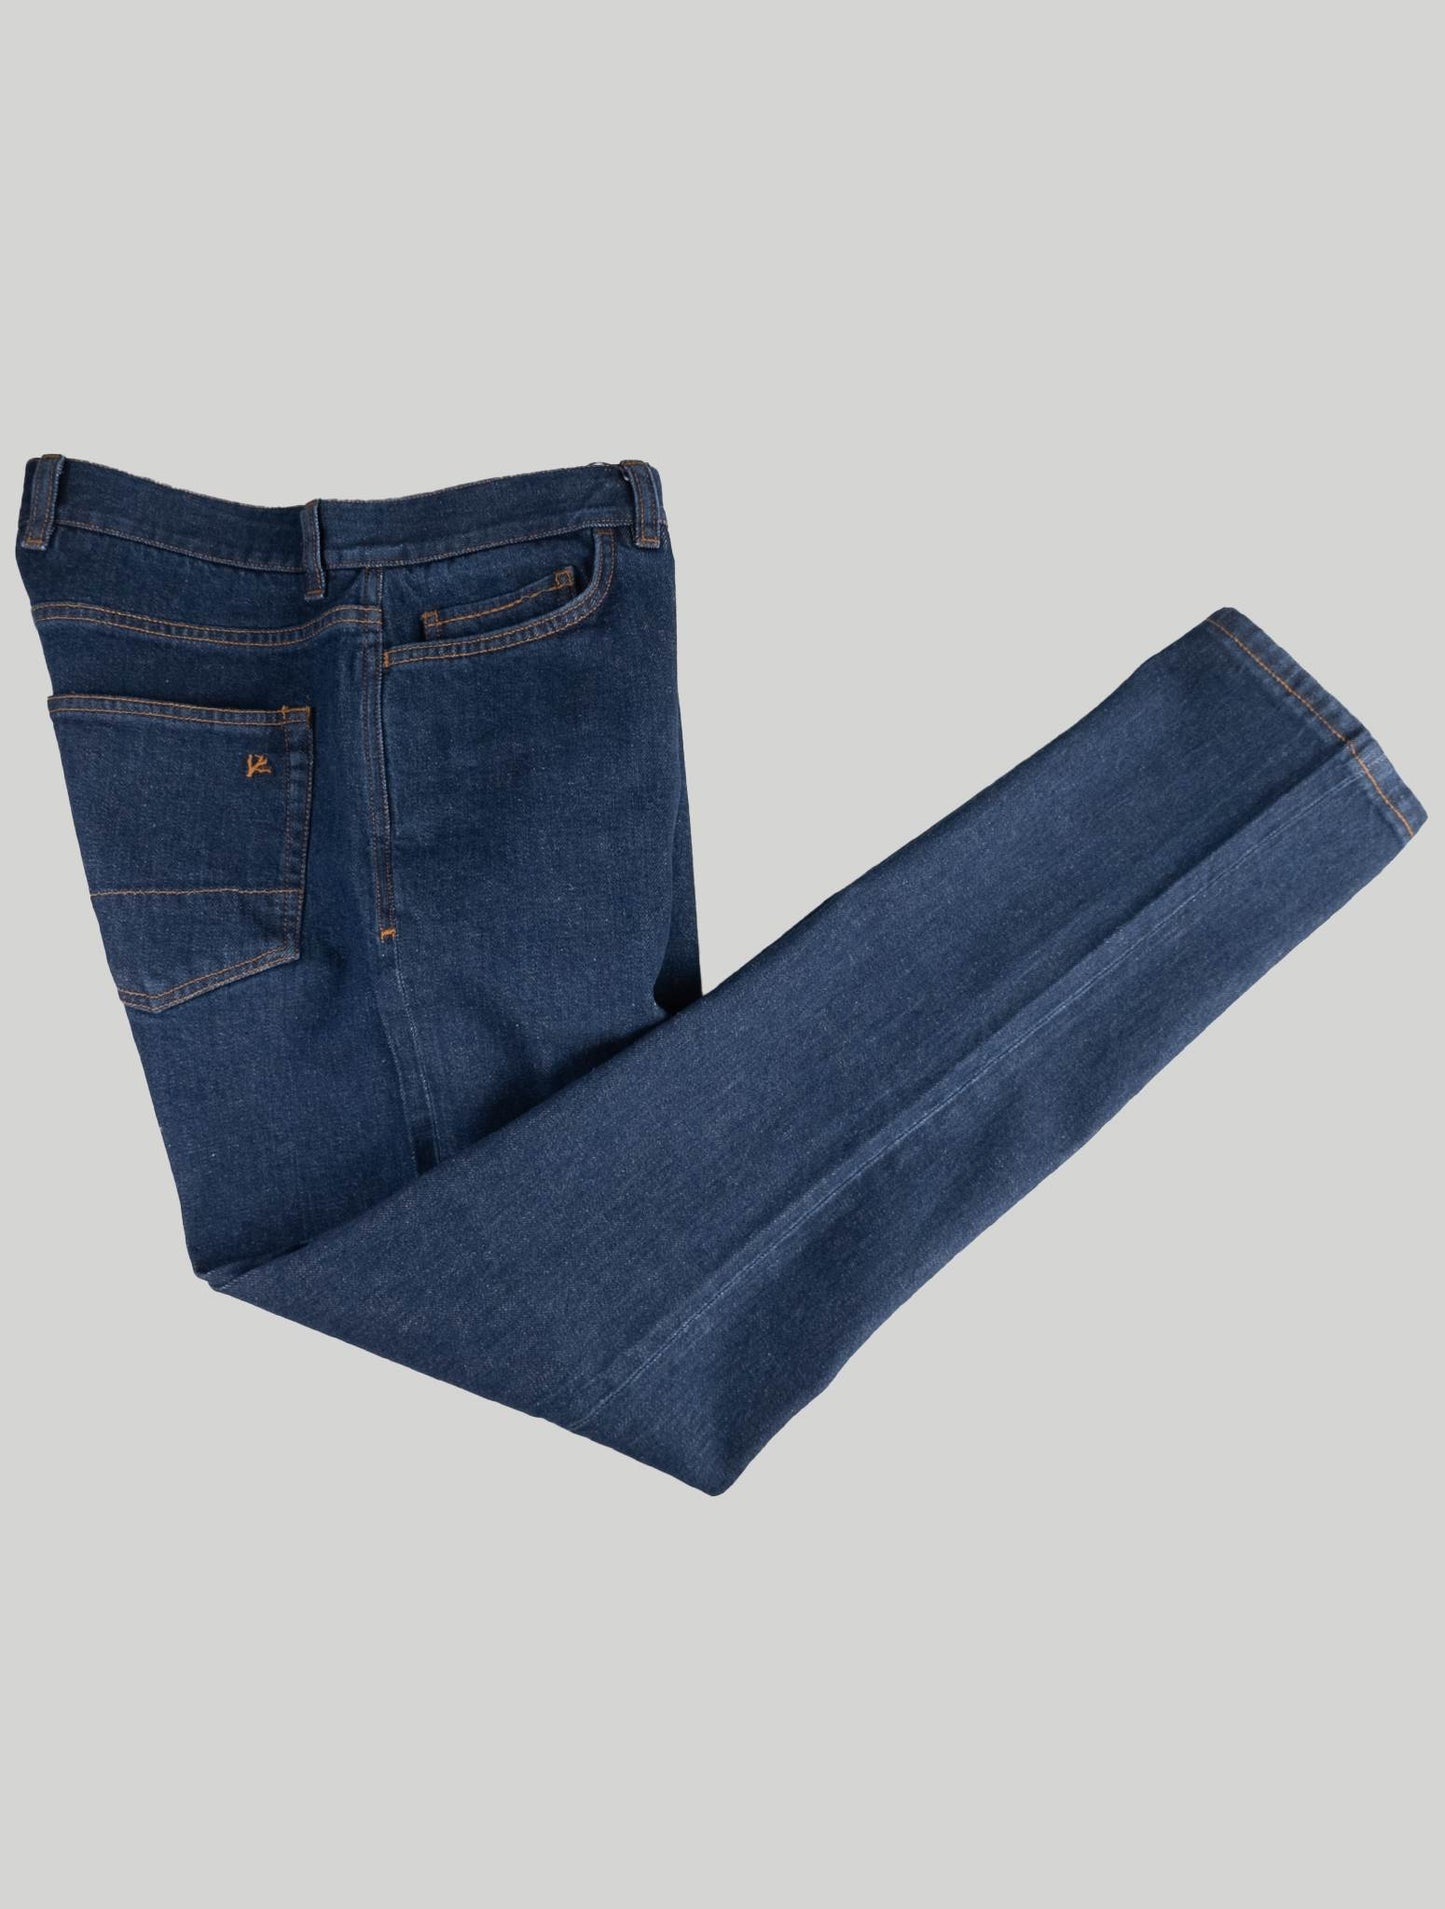 Isaia Blue Cotton Ea Jeans